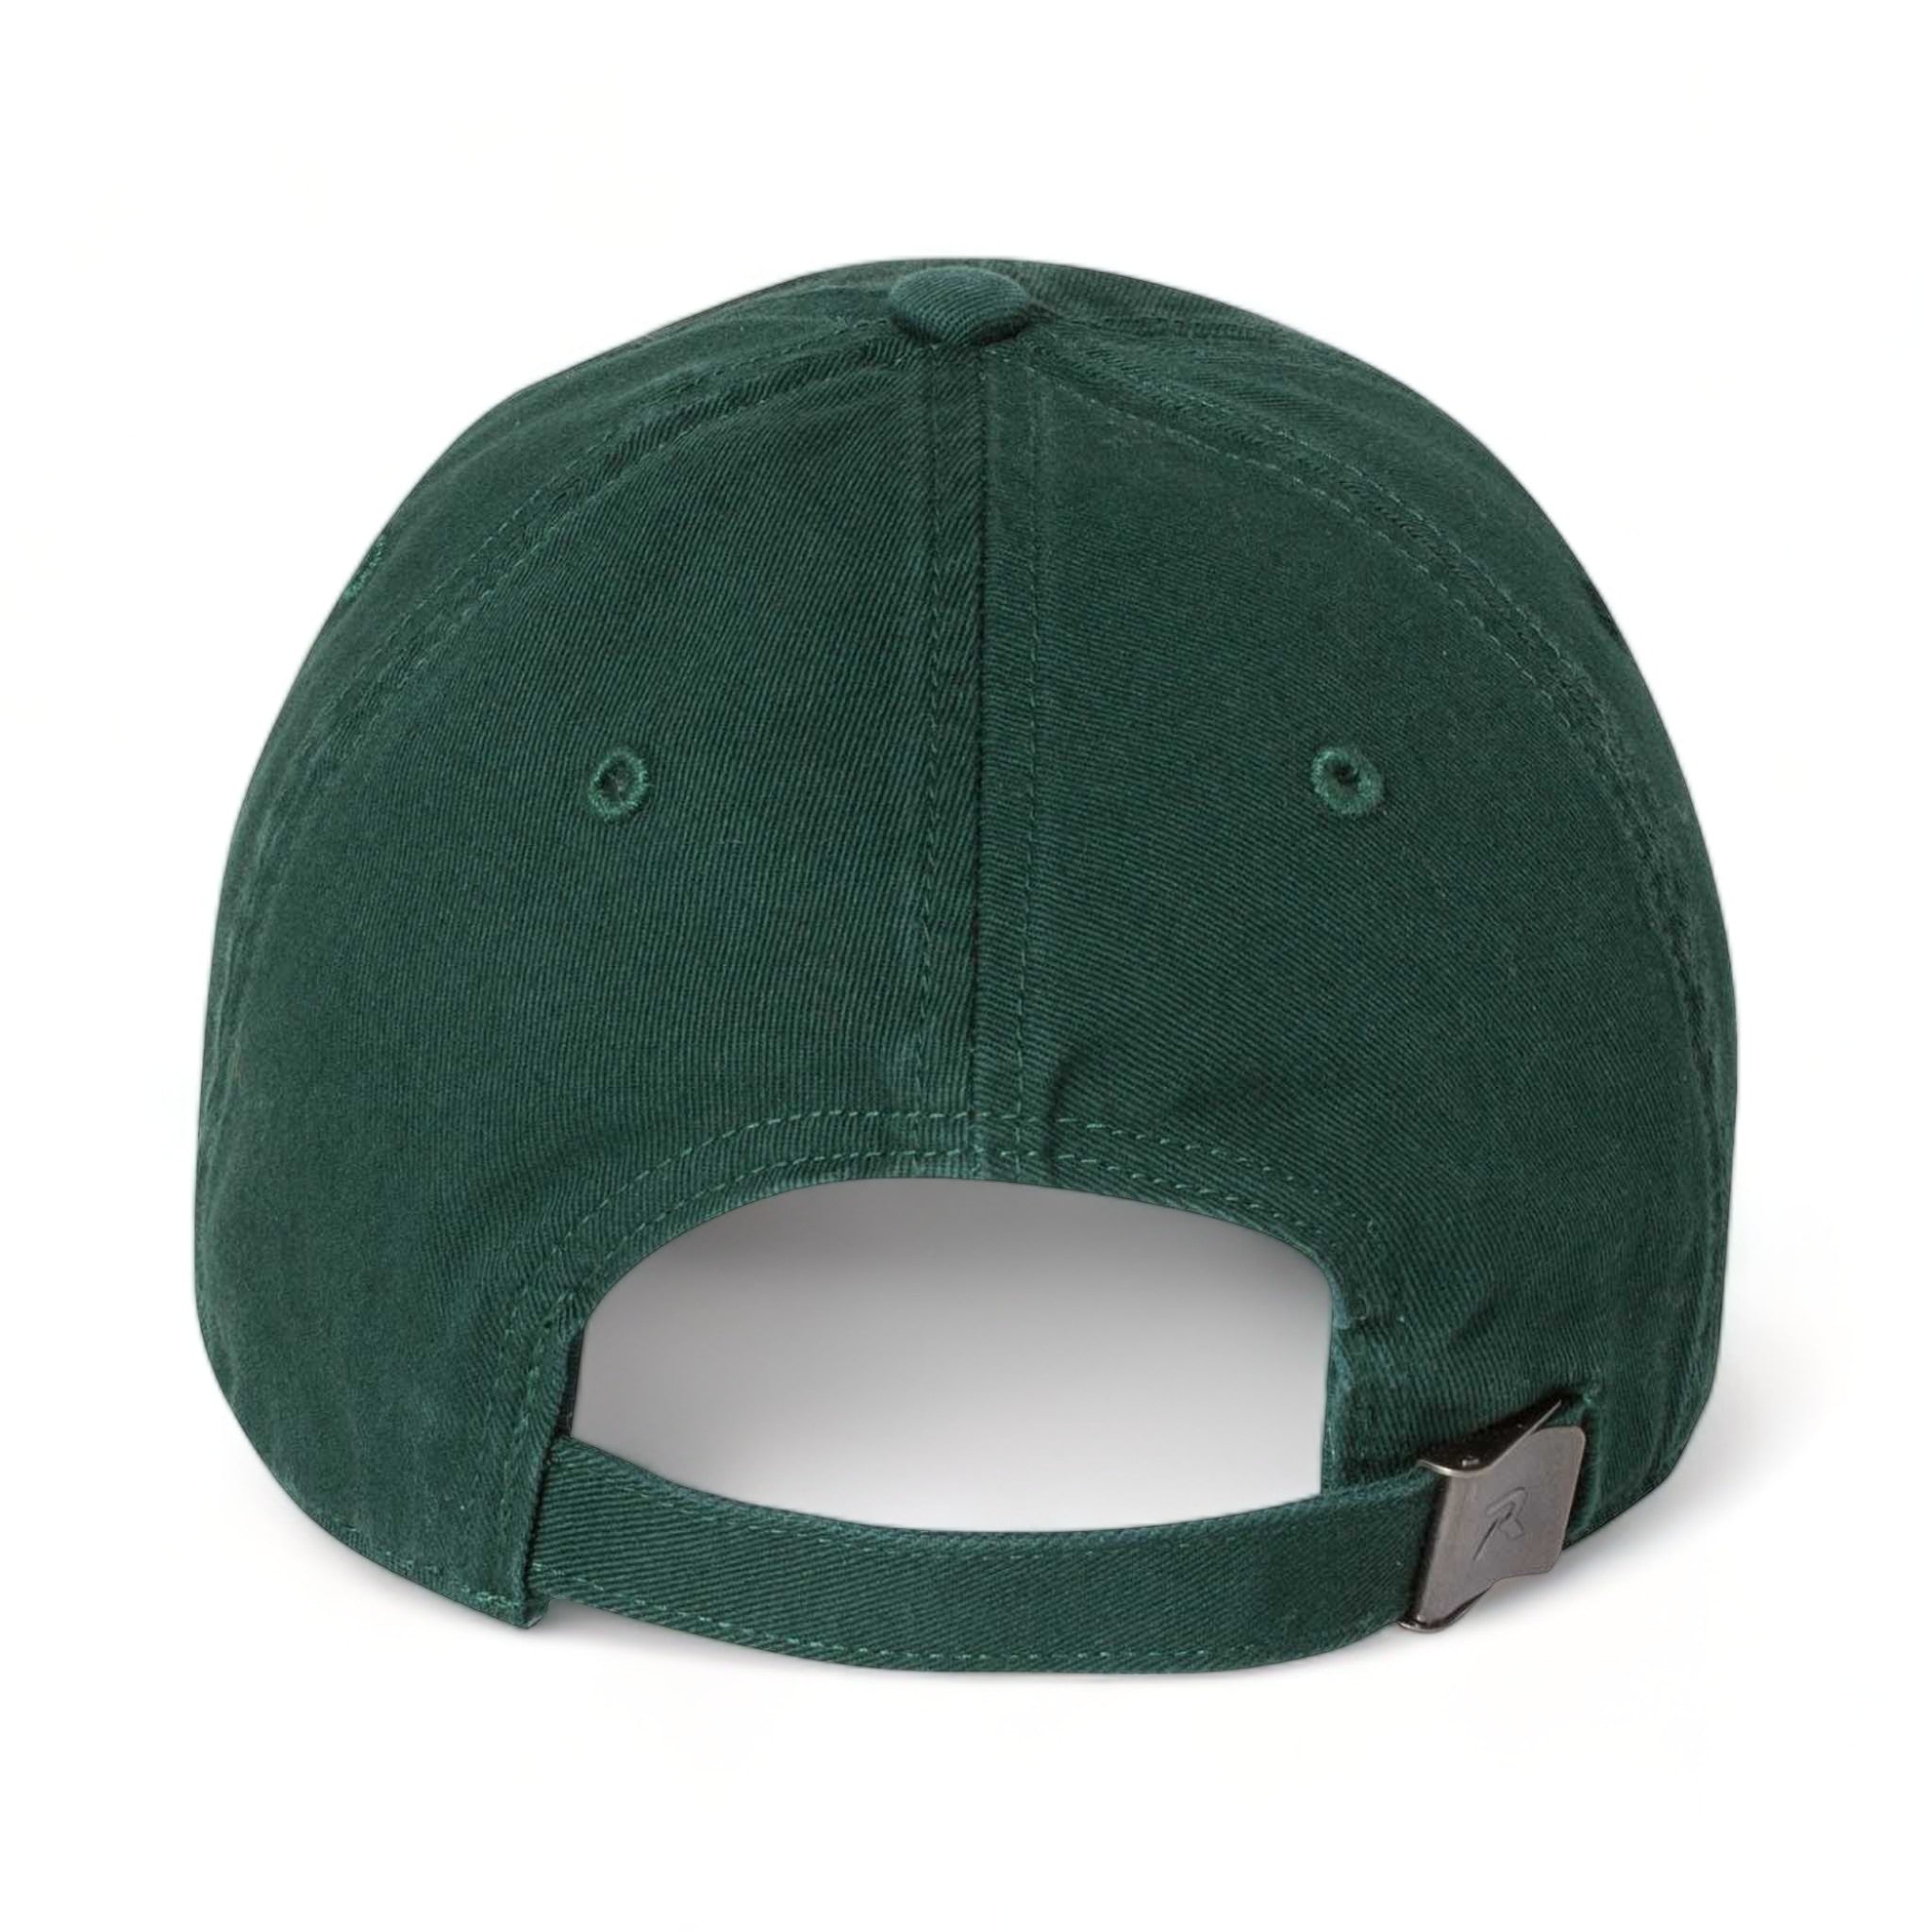 Back view of Richardson 320 custom hat in dark green